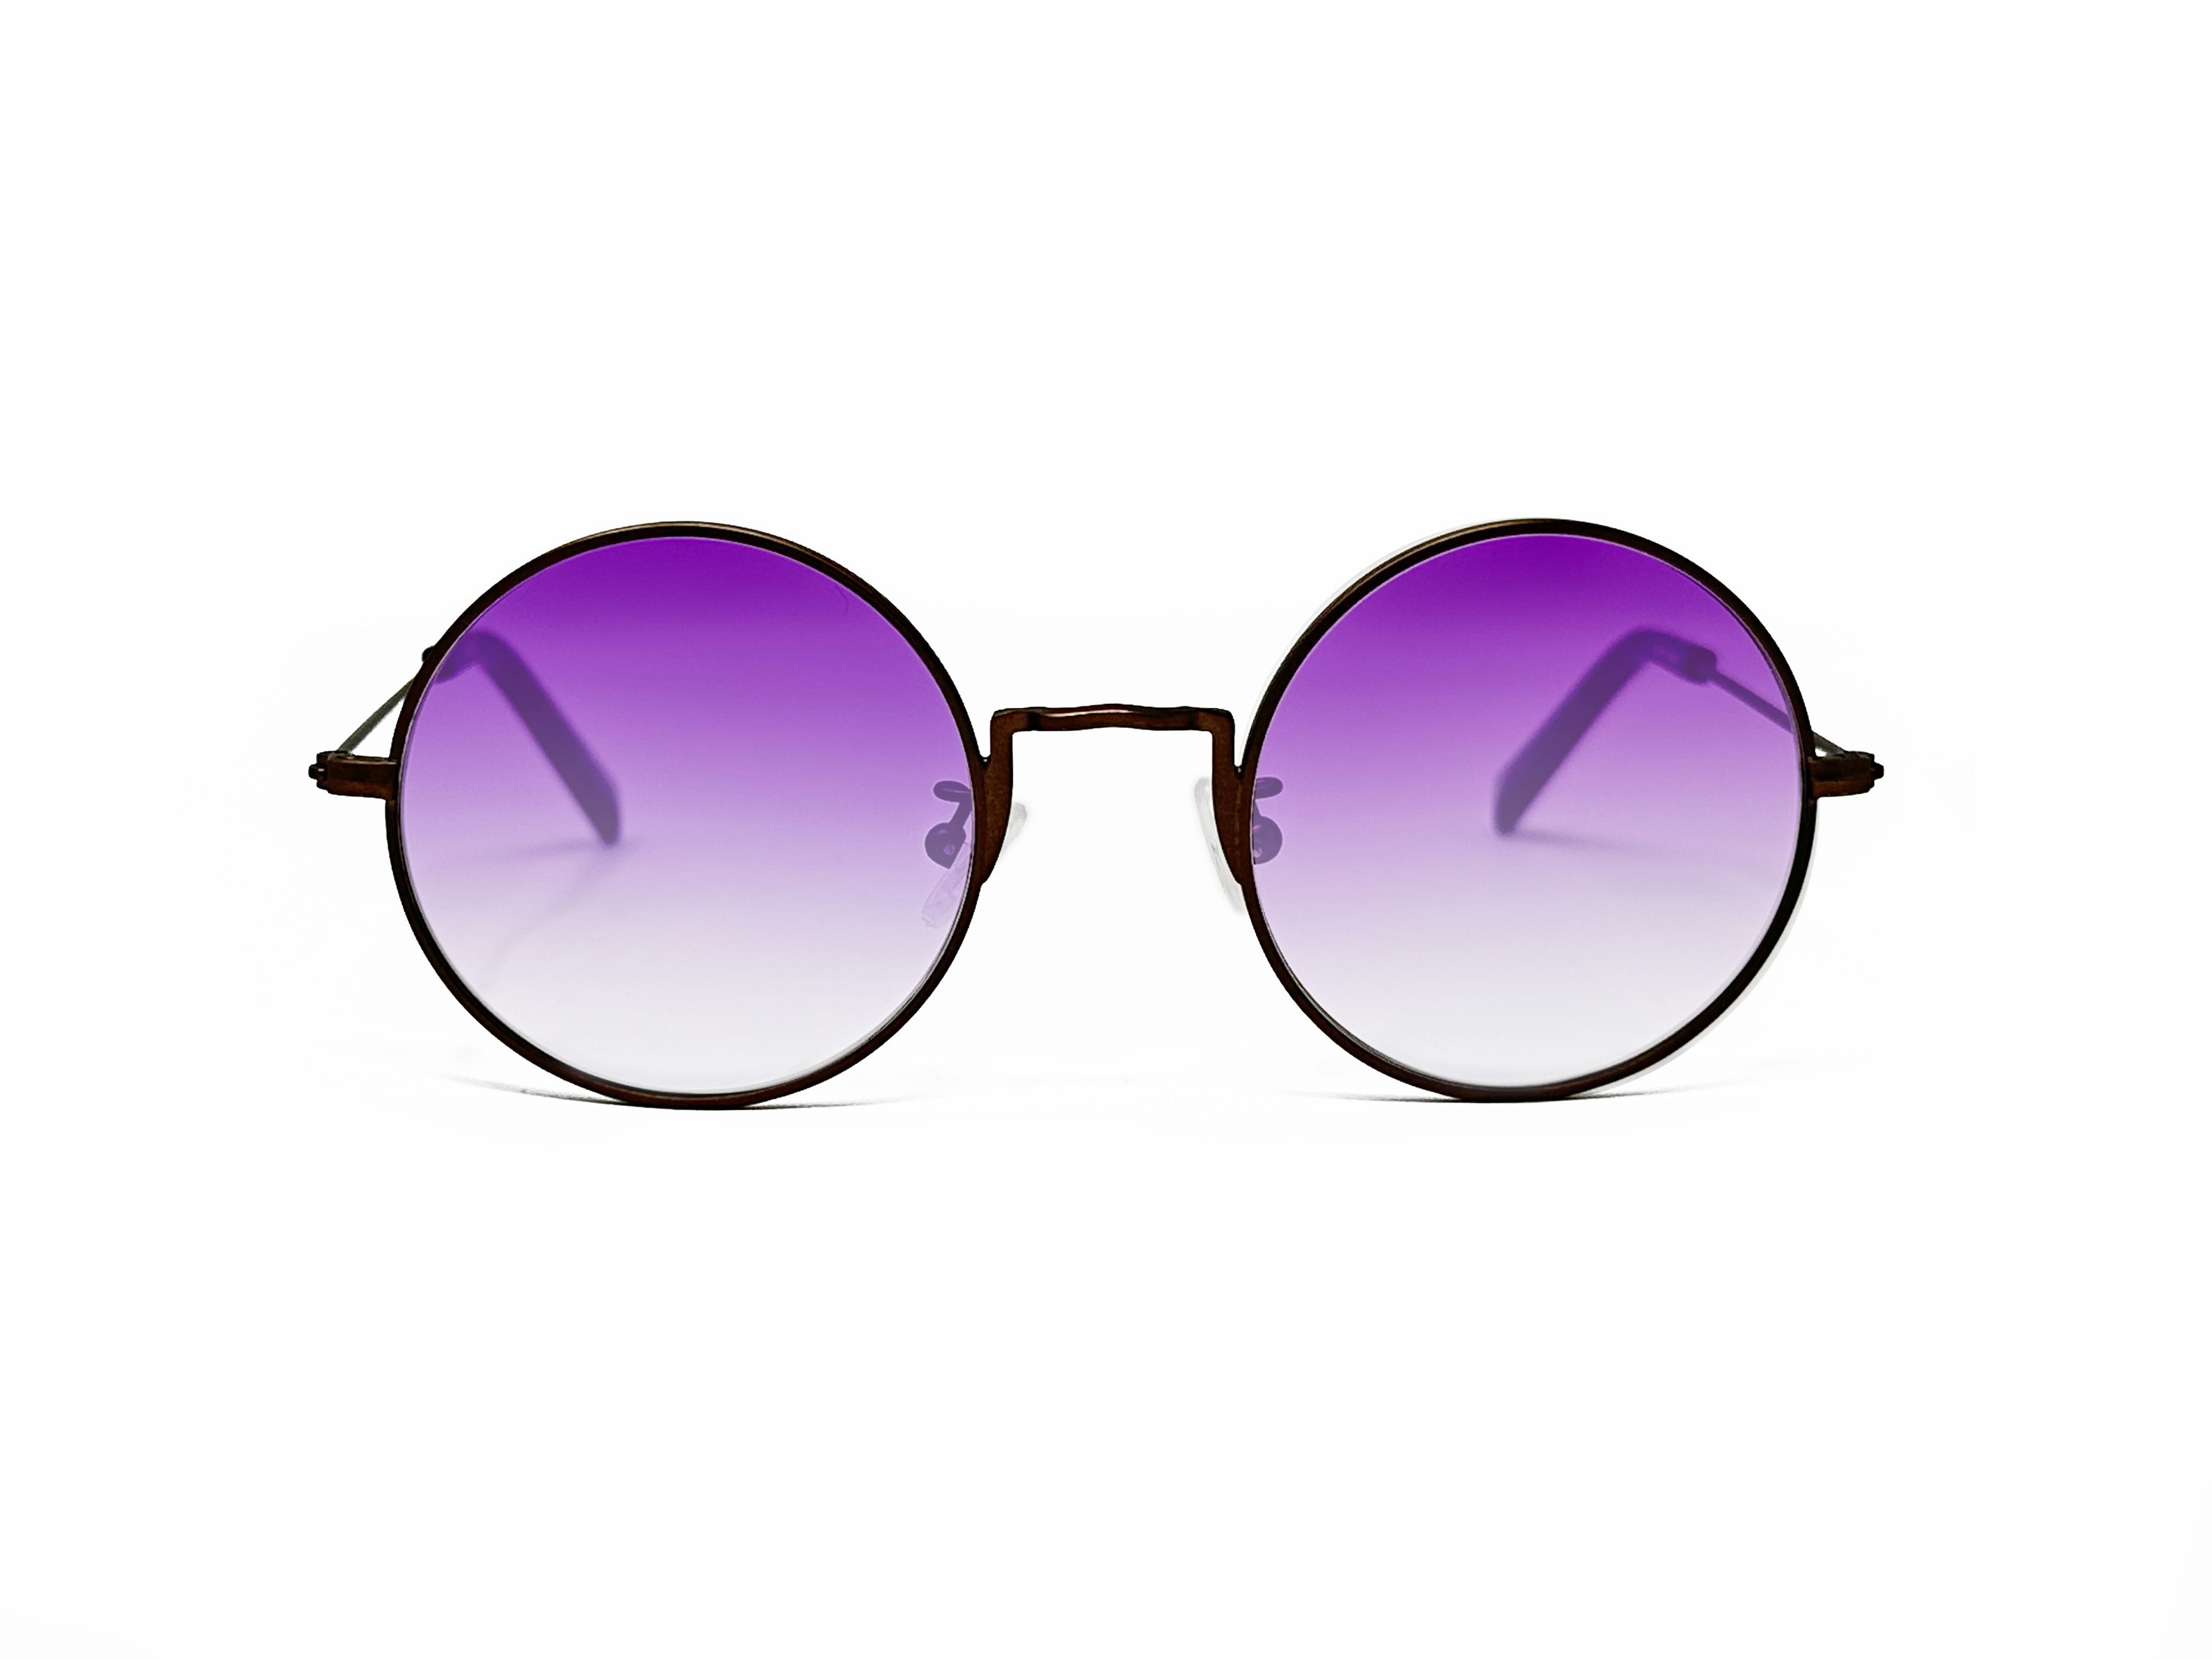 Buy Synbus Gandhi Round Shape Retro Silver Frame Purple lens UV Protection Sunglasses  Shades/Frame For Men & Women (Purple Lens) at Amazon.in